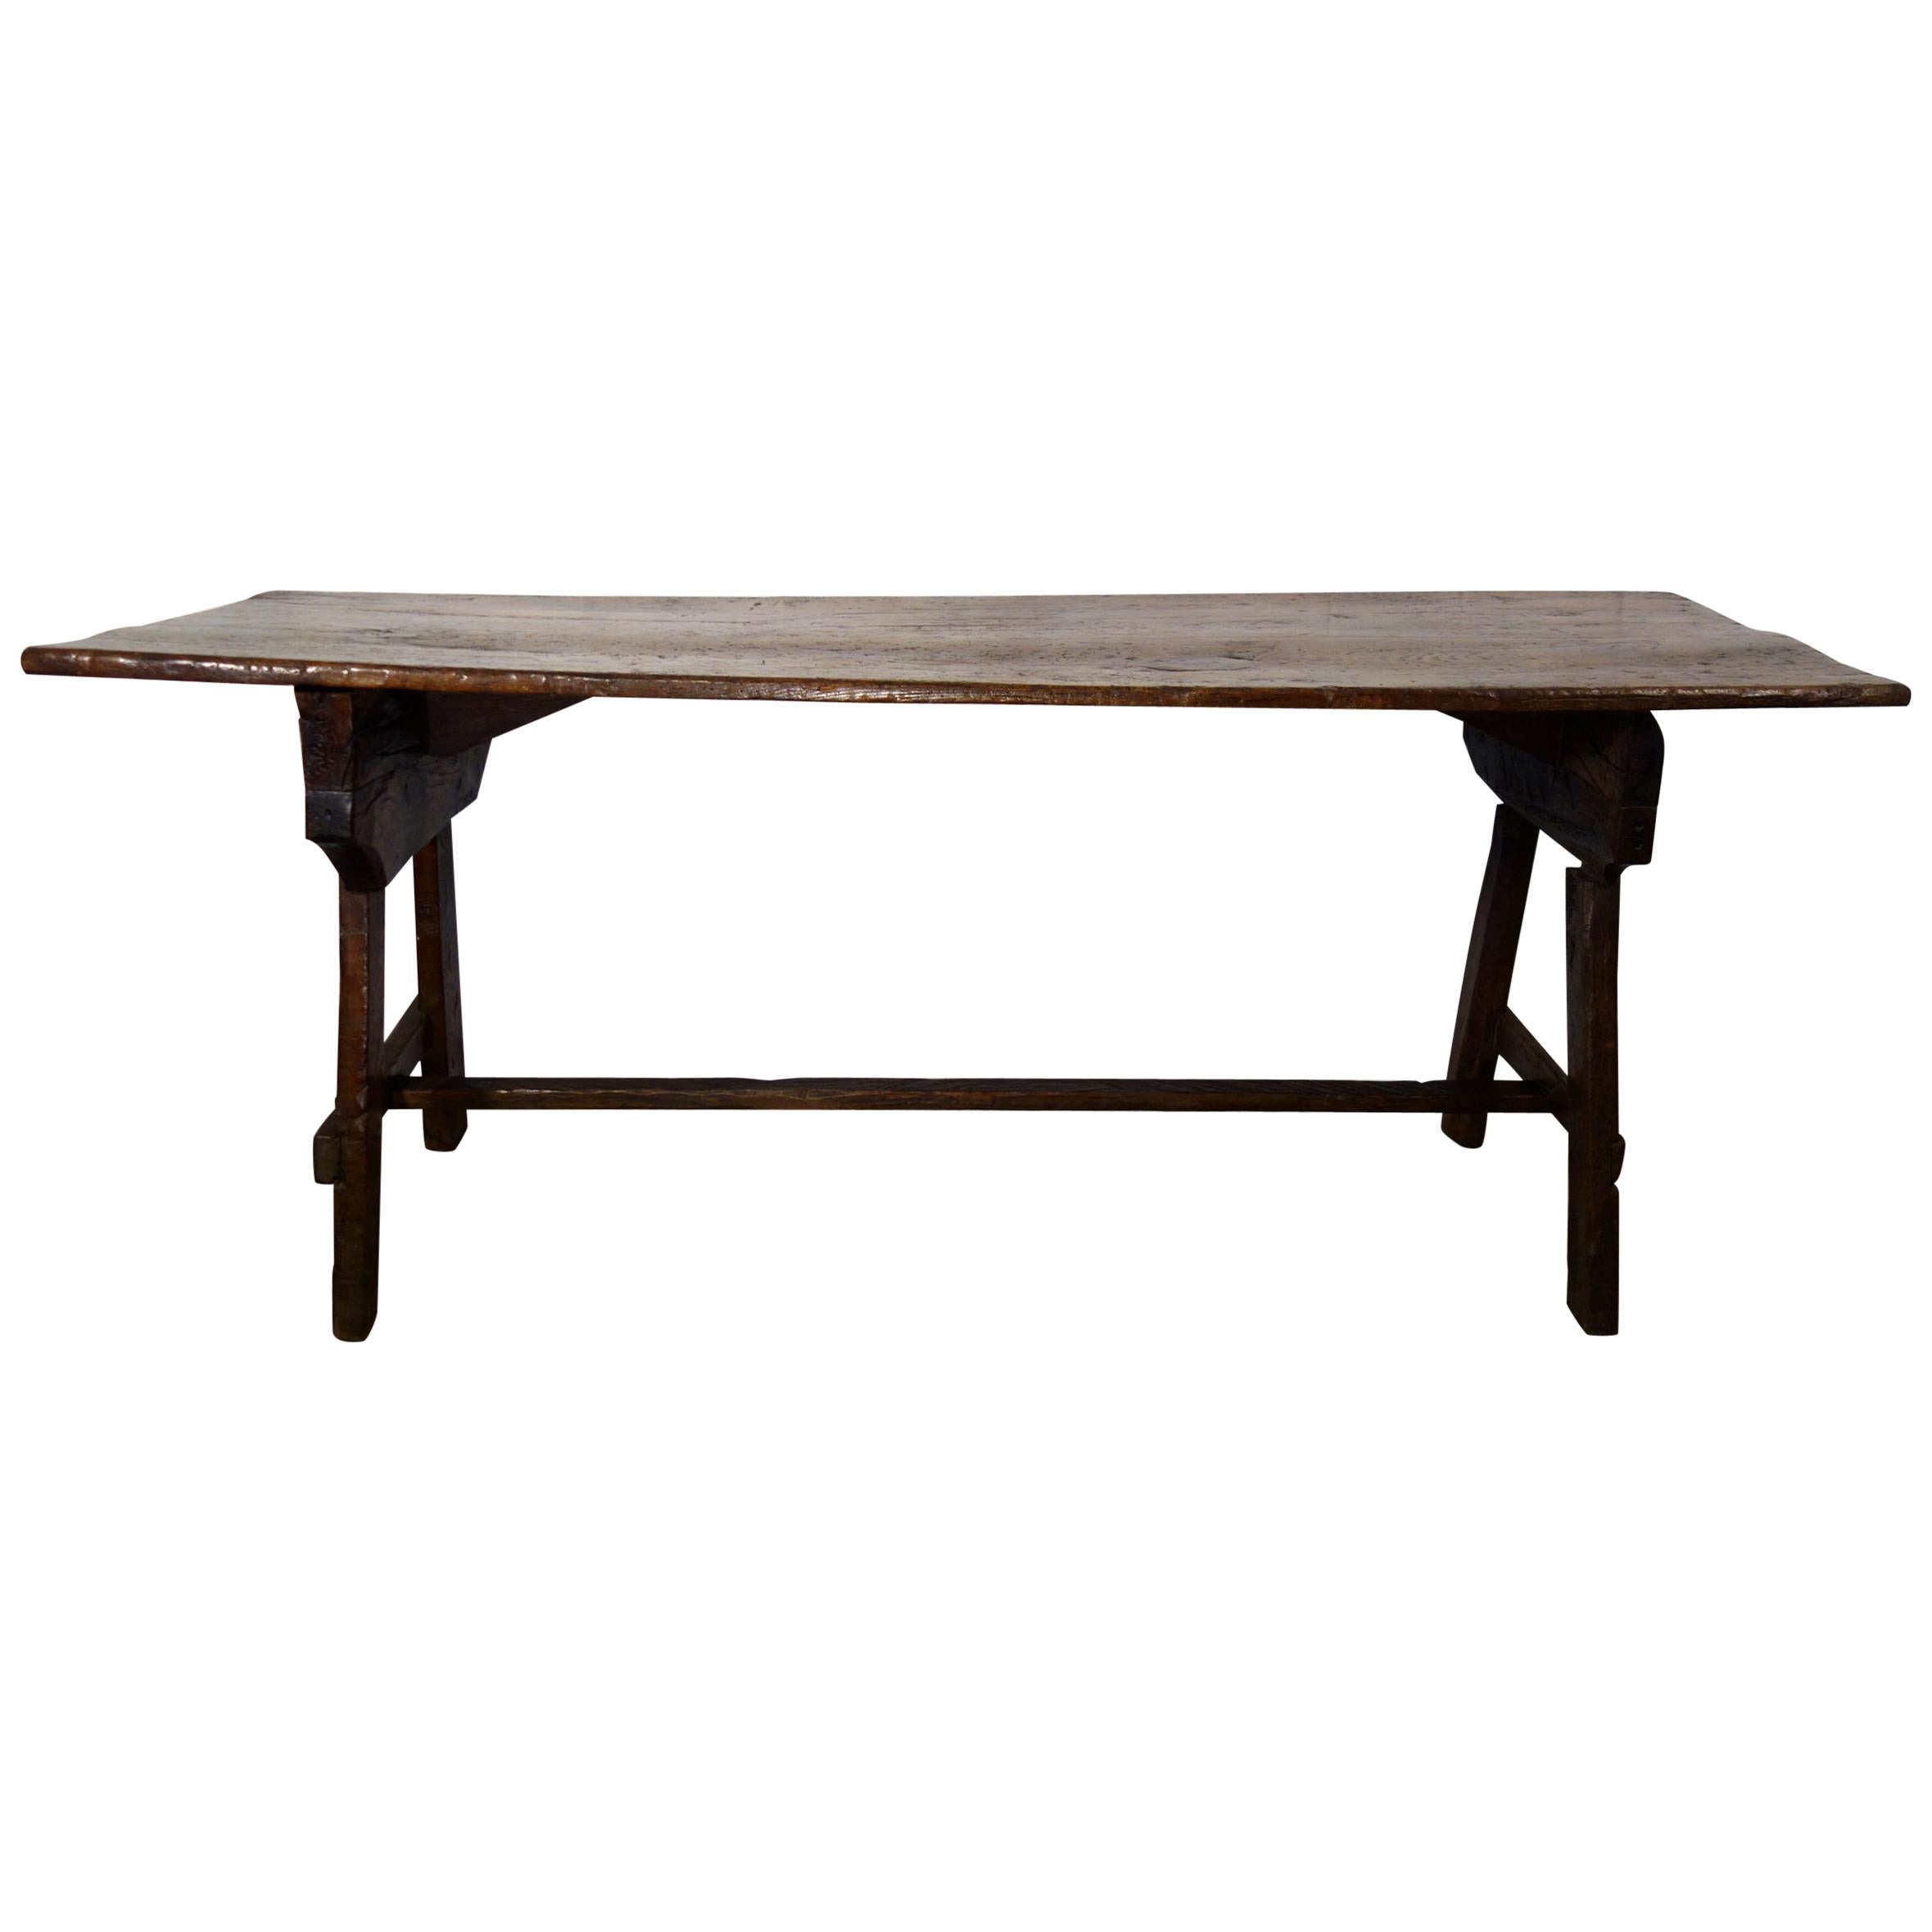 19th C Italian Chestnut Primitive Capretta Style Table available in reproduction For Sale